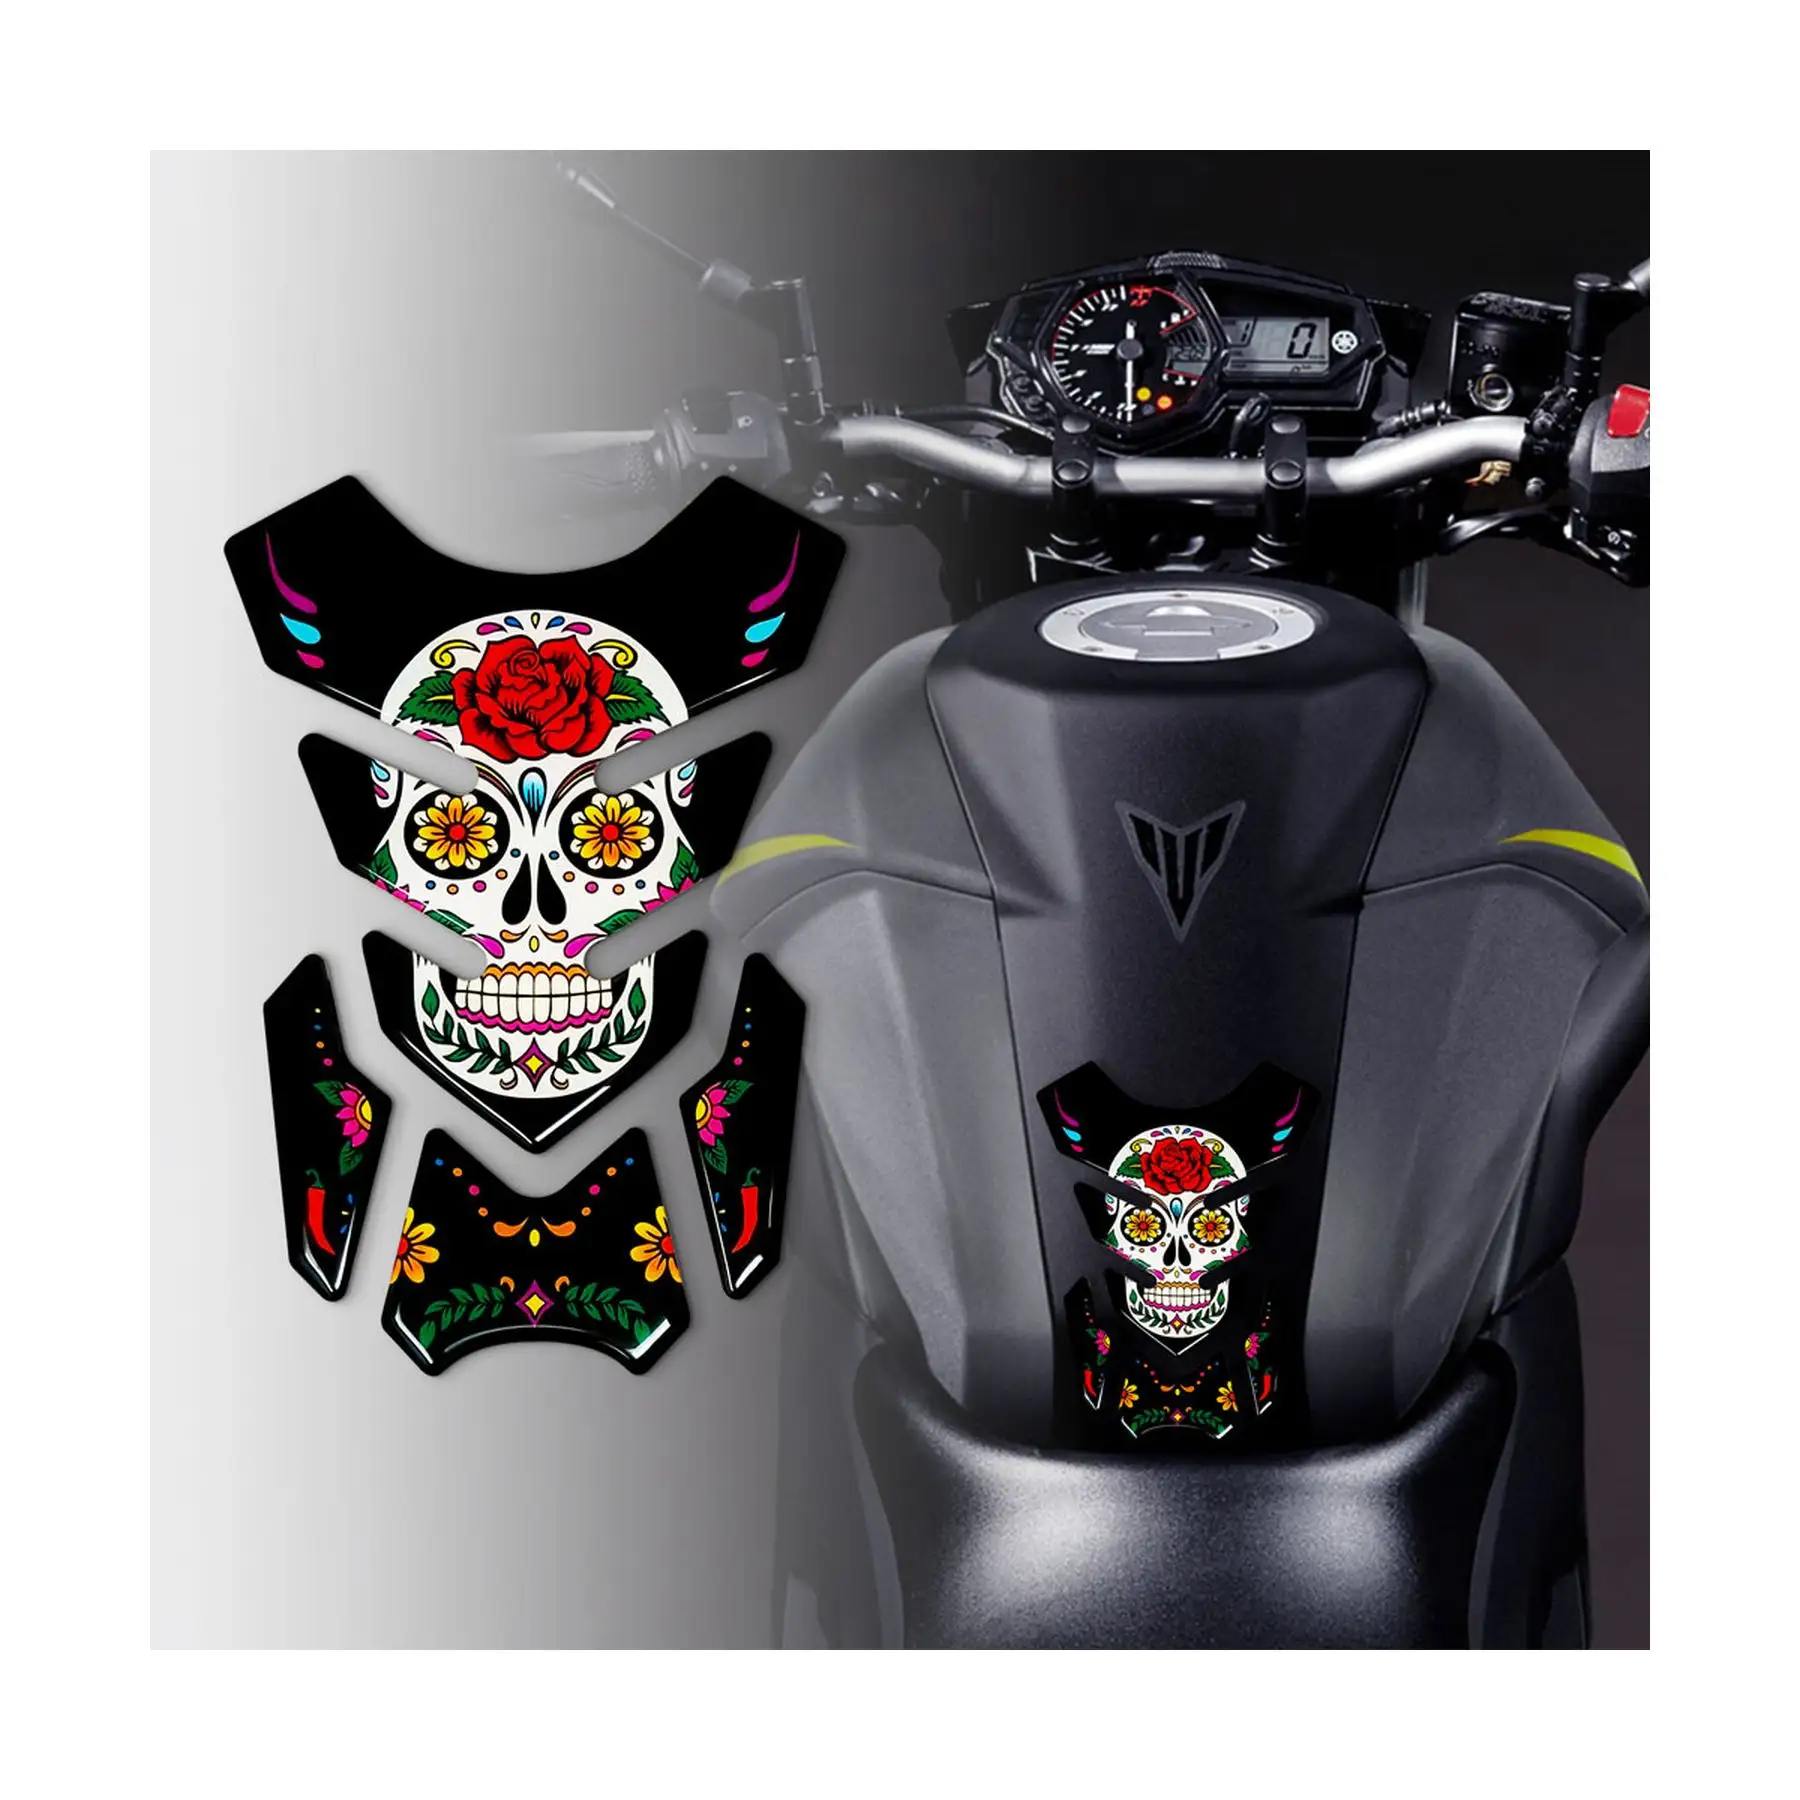 Italienische Exzellenz in Motorrad aufklebern-3D-Design, 19x13cm | UV-geschütztes, hochwertiges Material für Langlebig keit